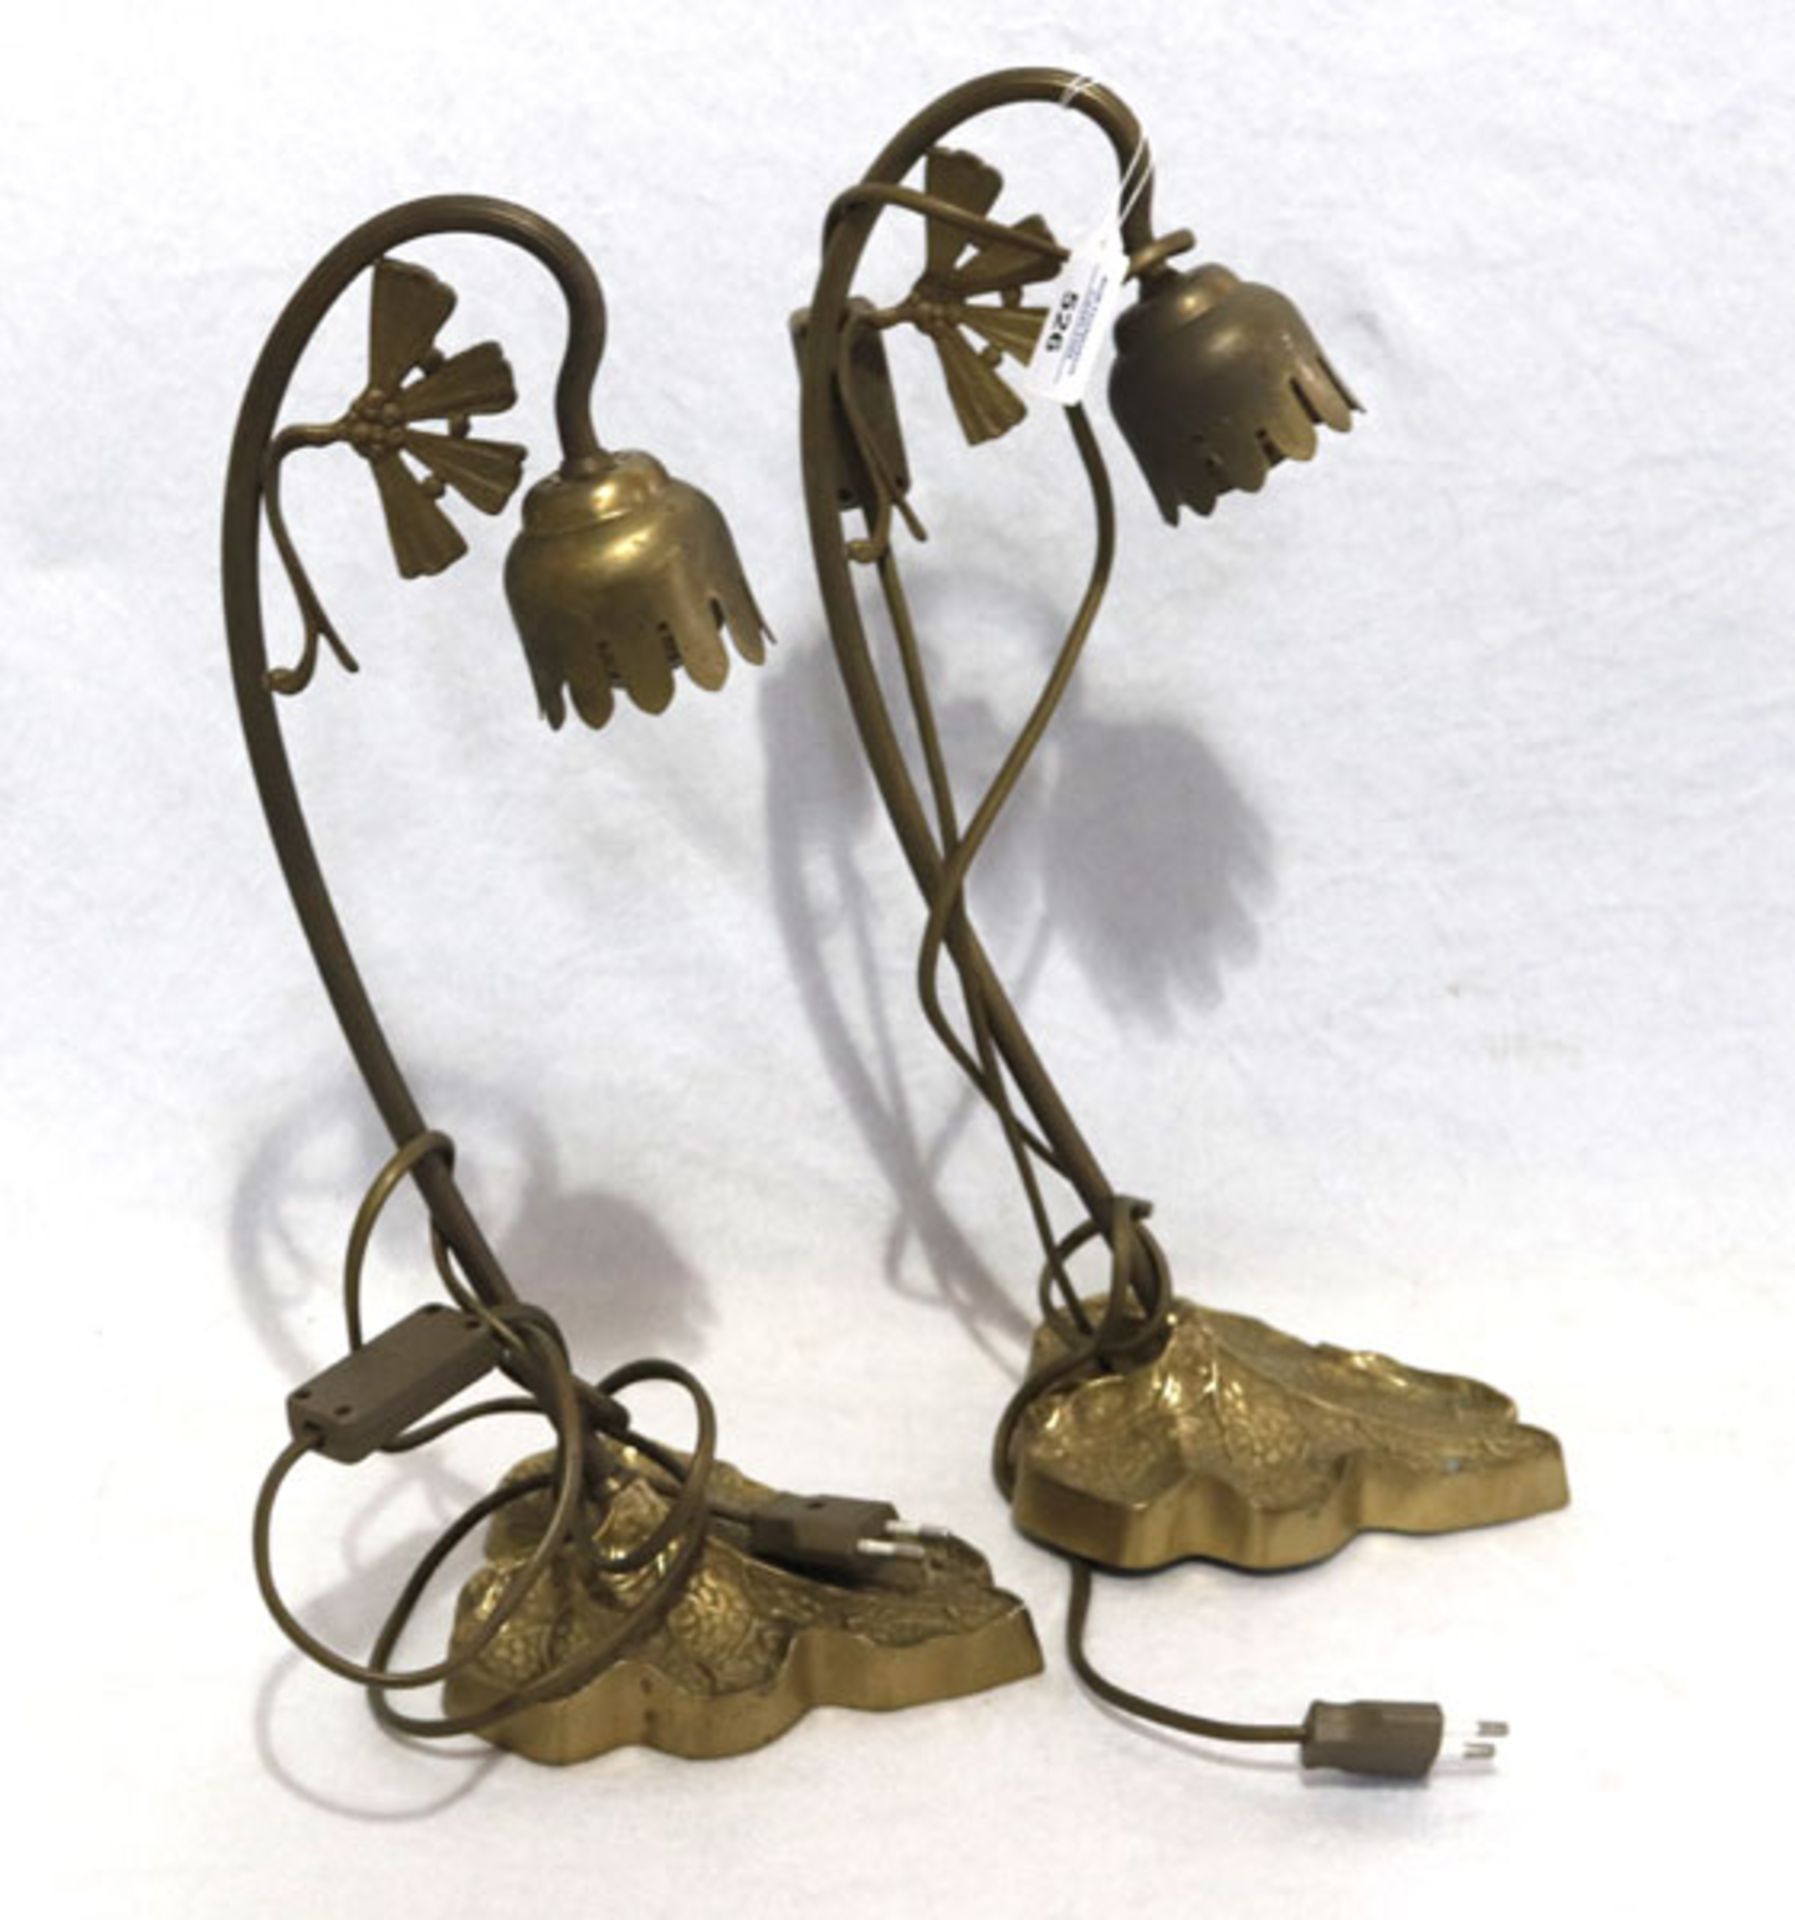 Paar Jugendstil Tischlampen in floraler Form, H 42 cm, B 14 cm, T 25 cm, Gebrauchsspuren, Funktion